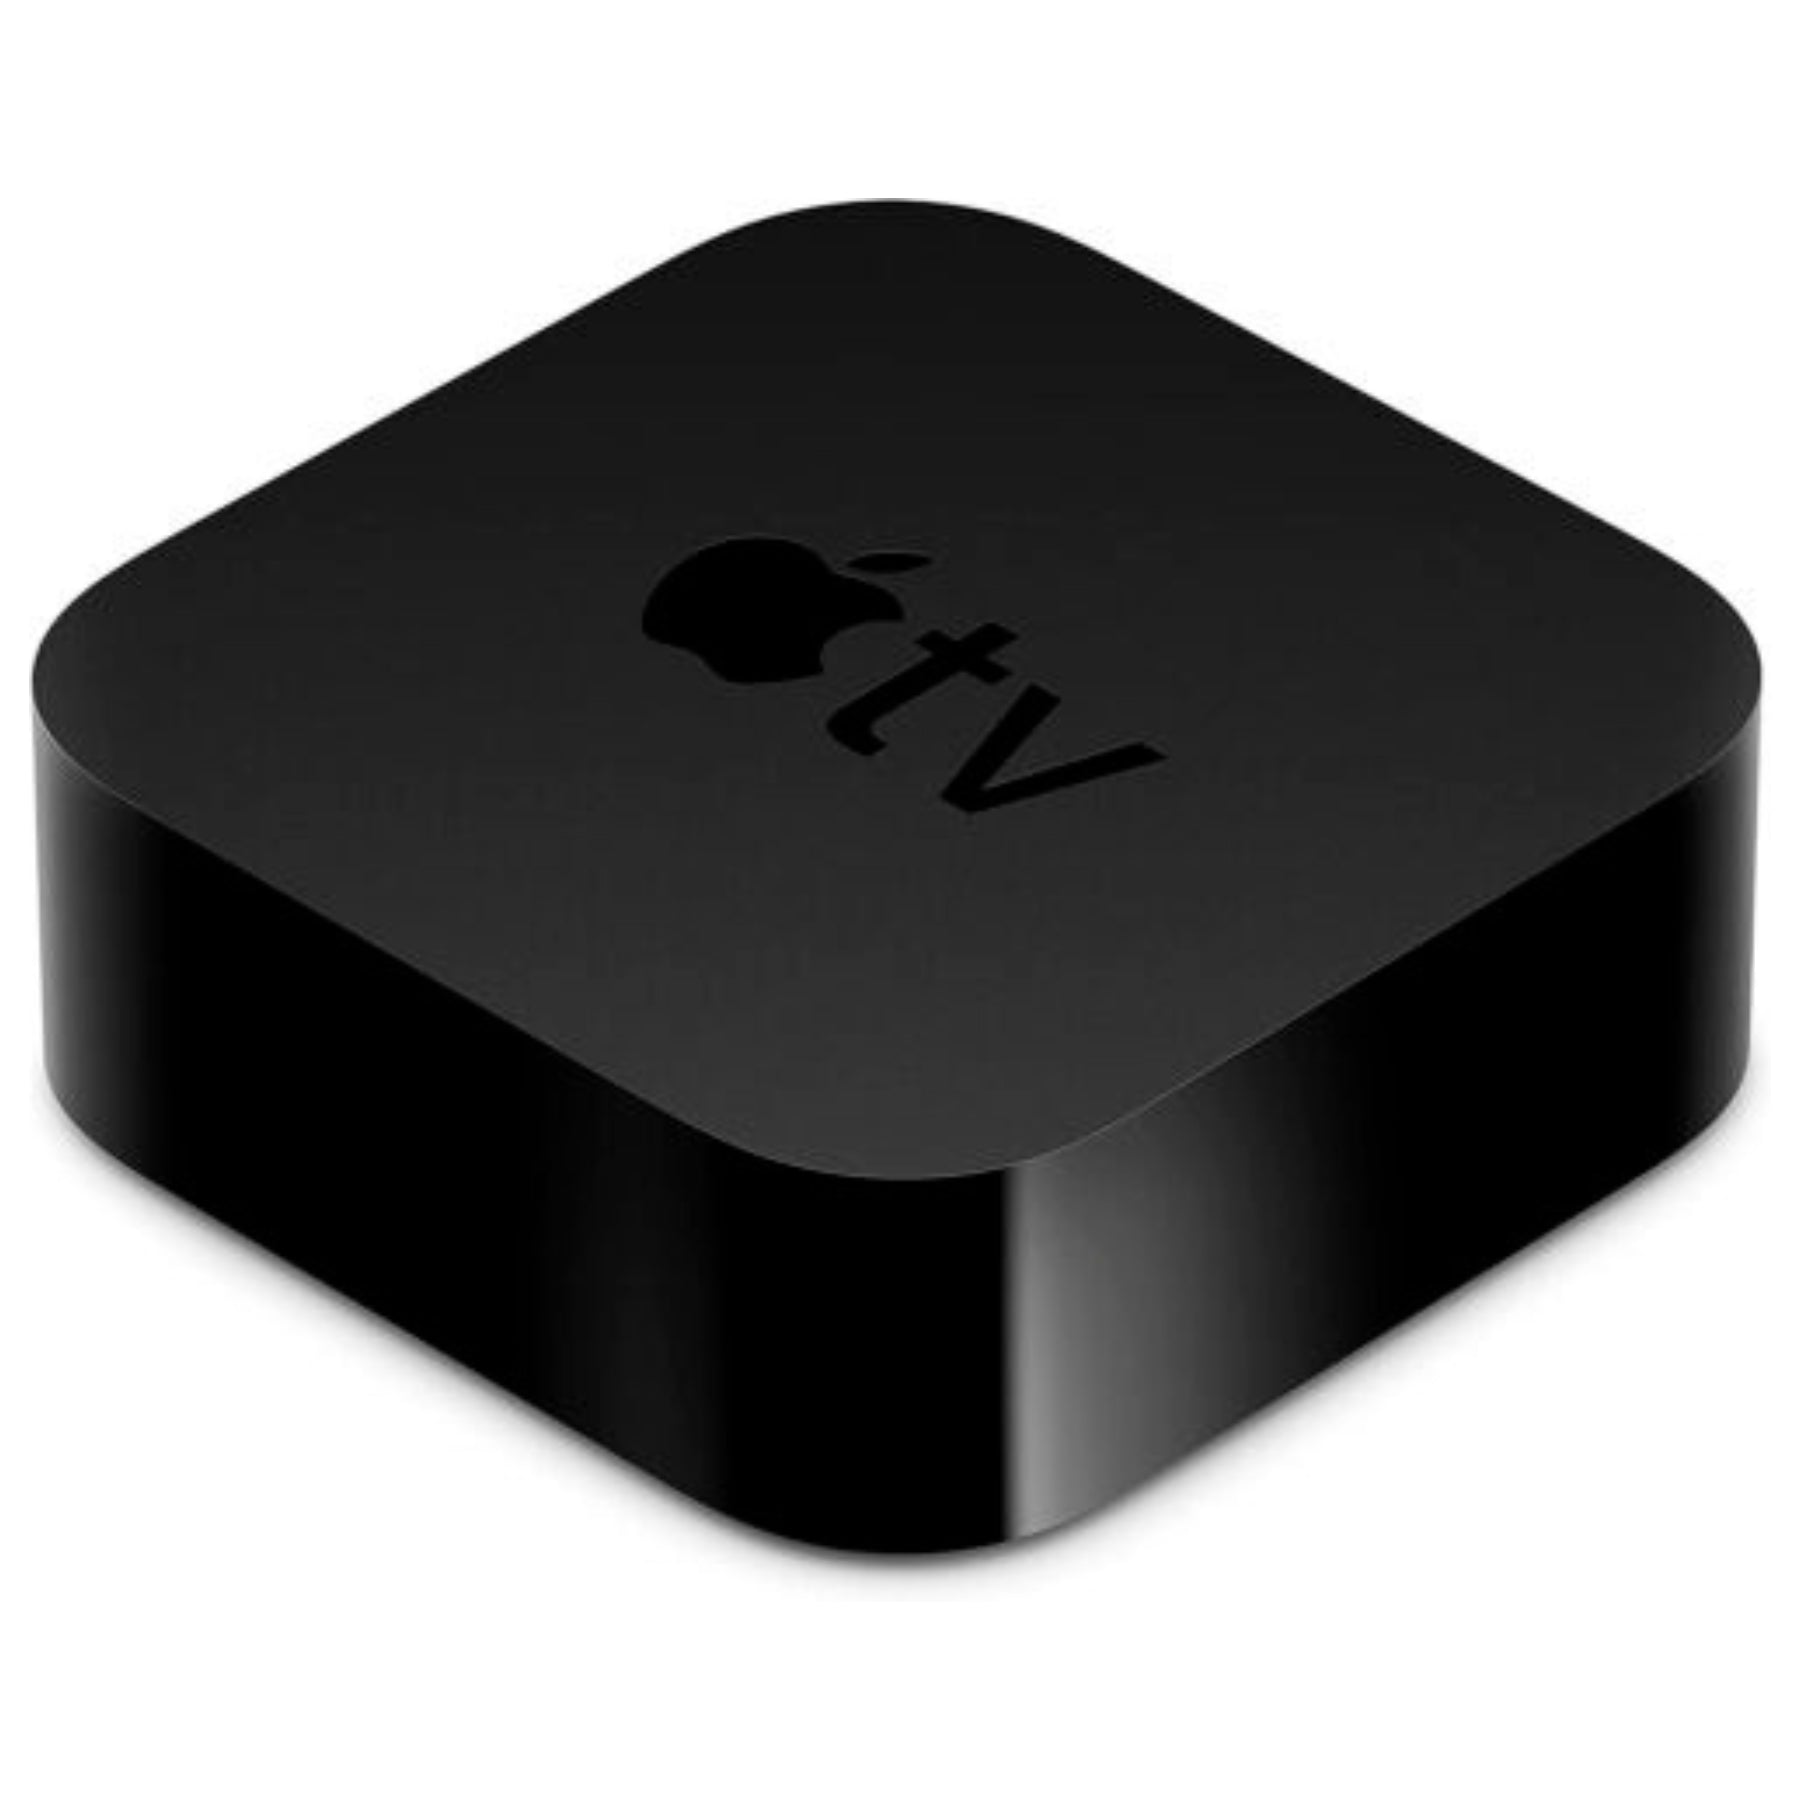 Apple - TV 4K 32GB (2nd Generation) - Black -Clearance / Open Box